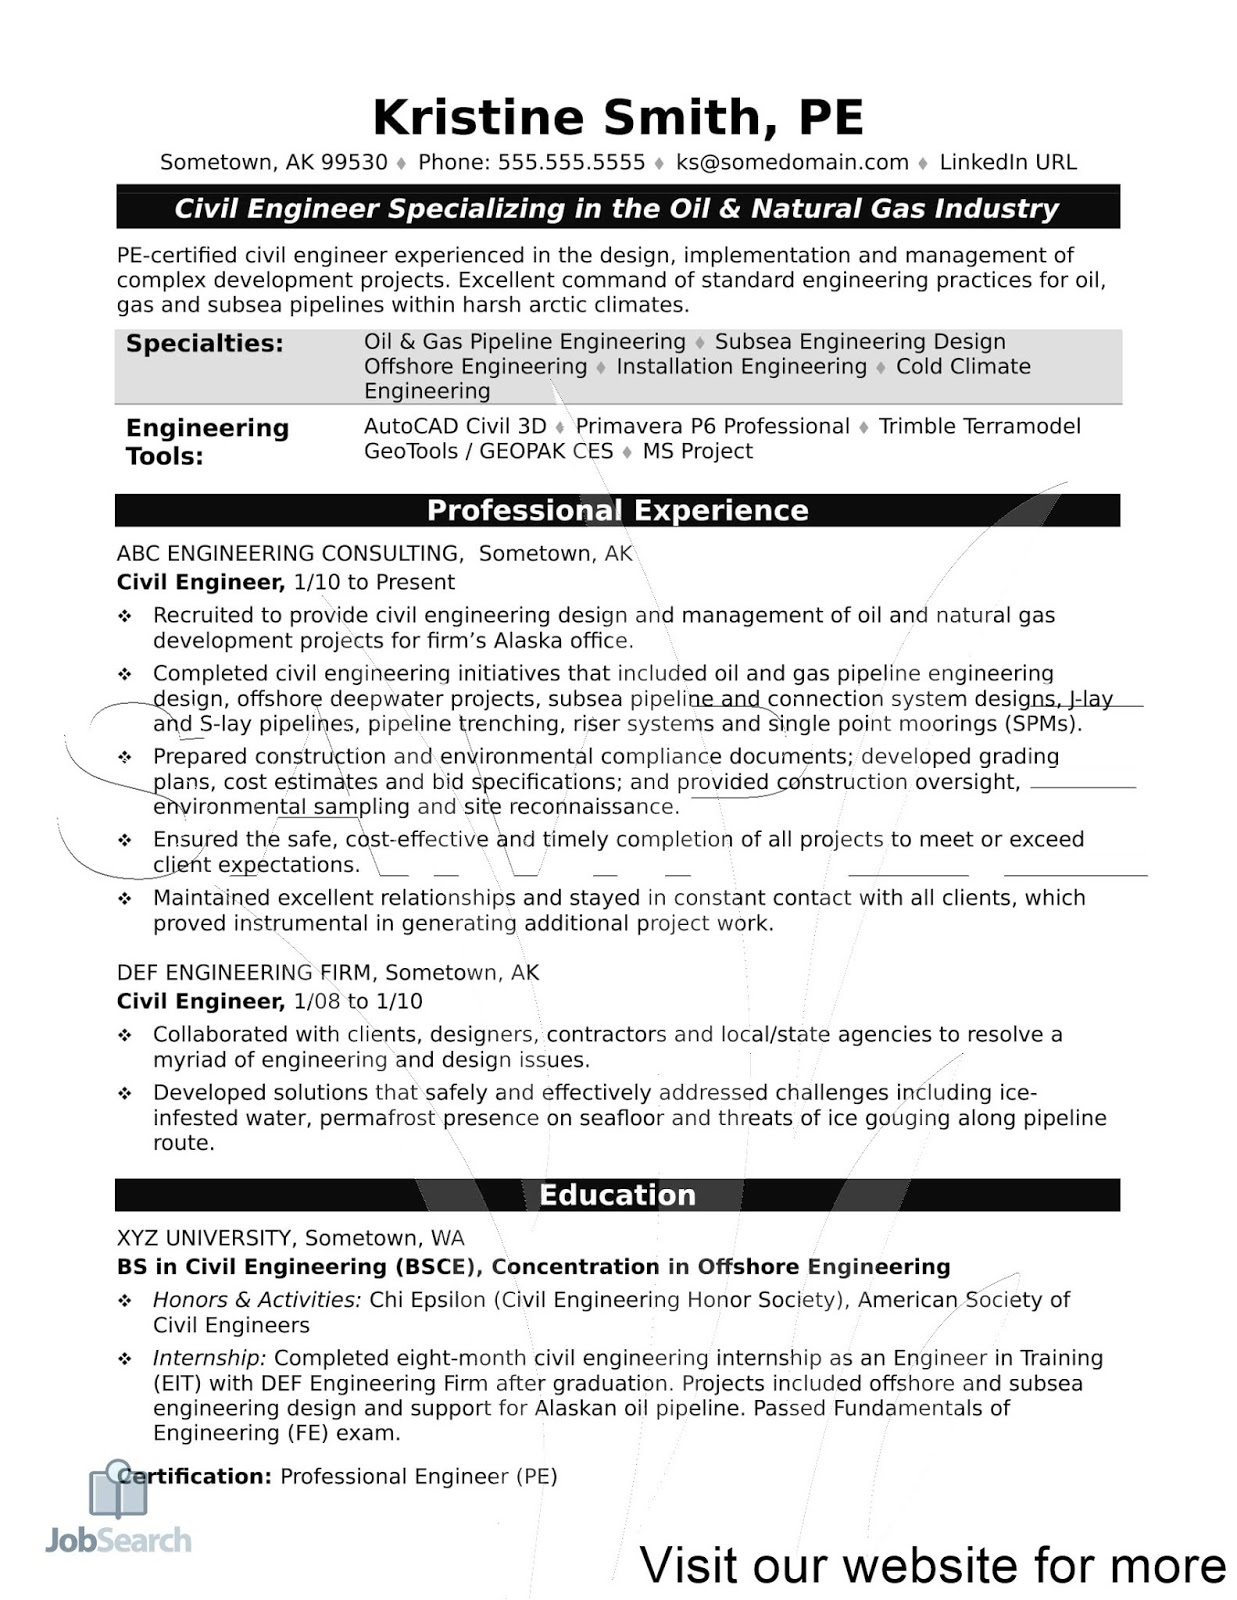 resume for engineering resume for engineering internship resume for engineering students resume for engineering graduate 